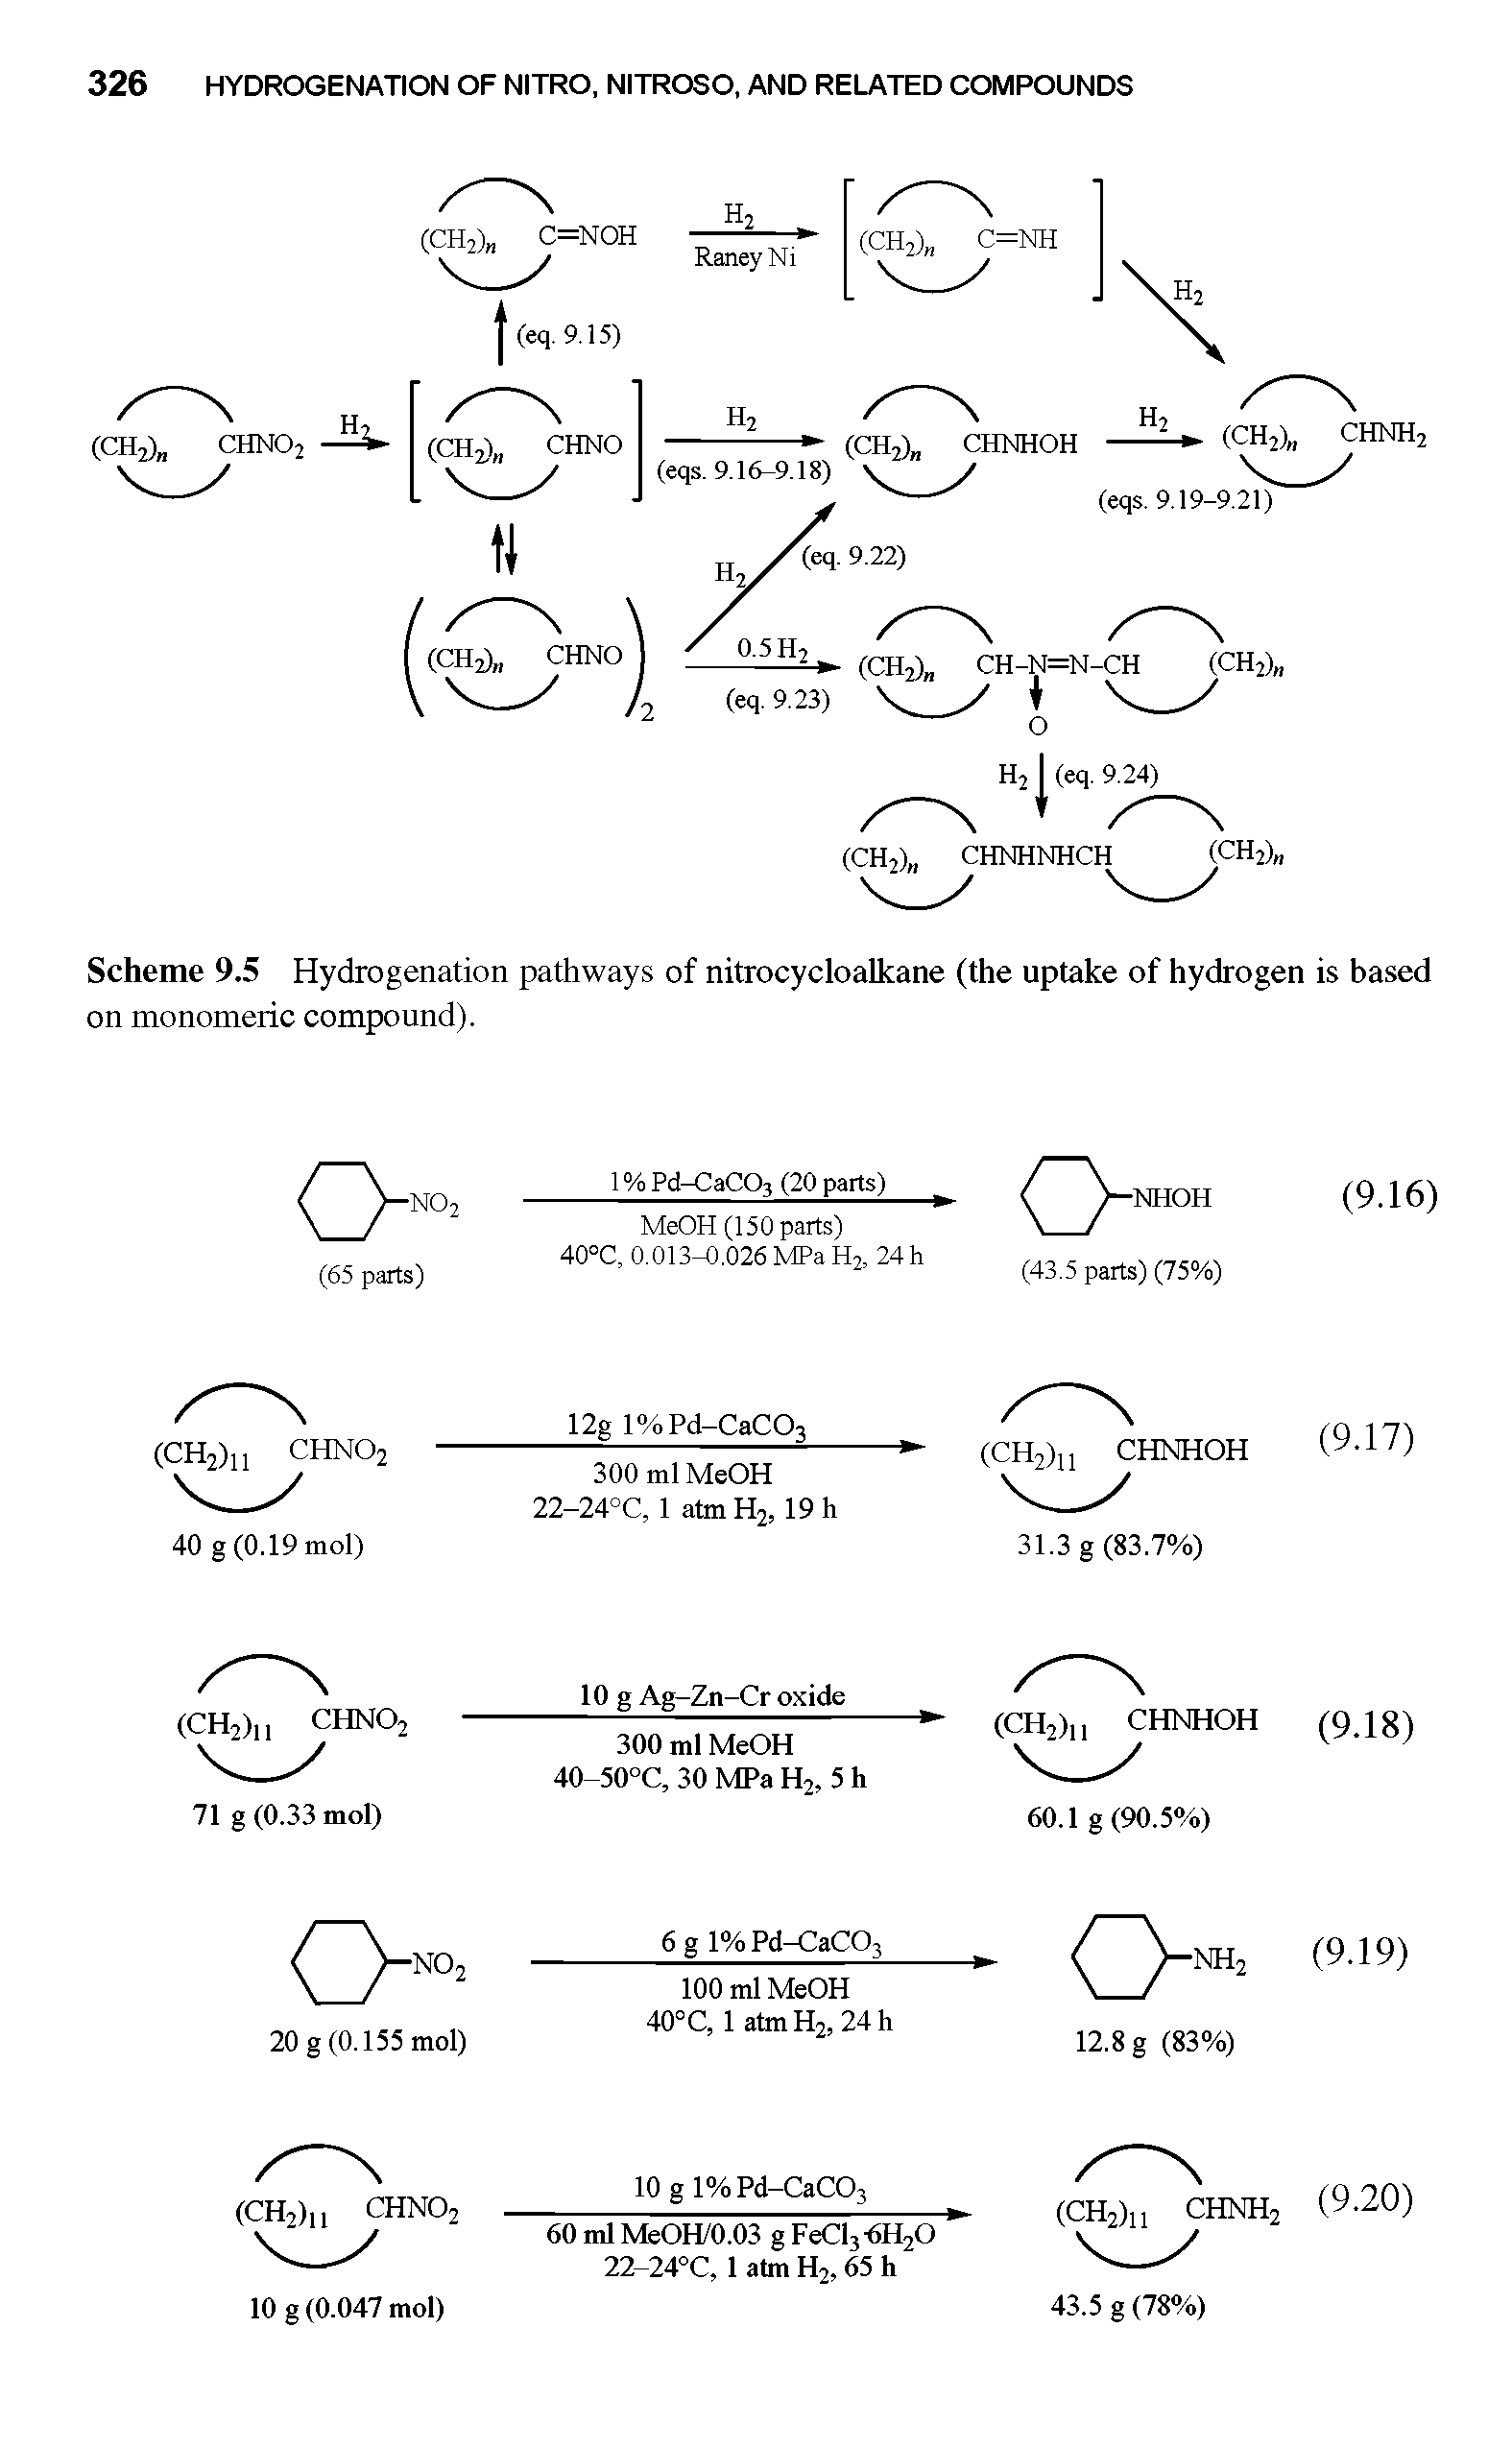 Scheme 9.5 Hydrogenation pathways of nitrocycloalkane (the uptake of hydrogen is based on monomeric compound).